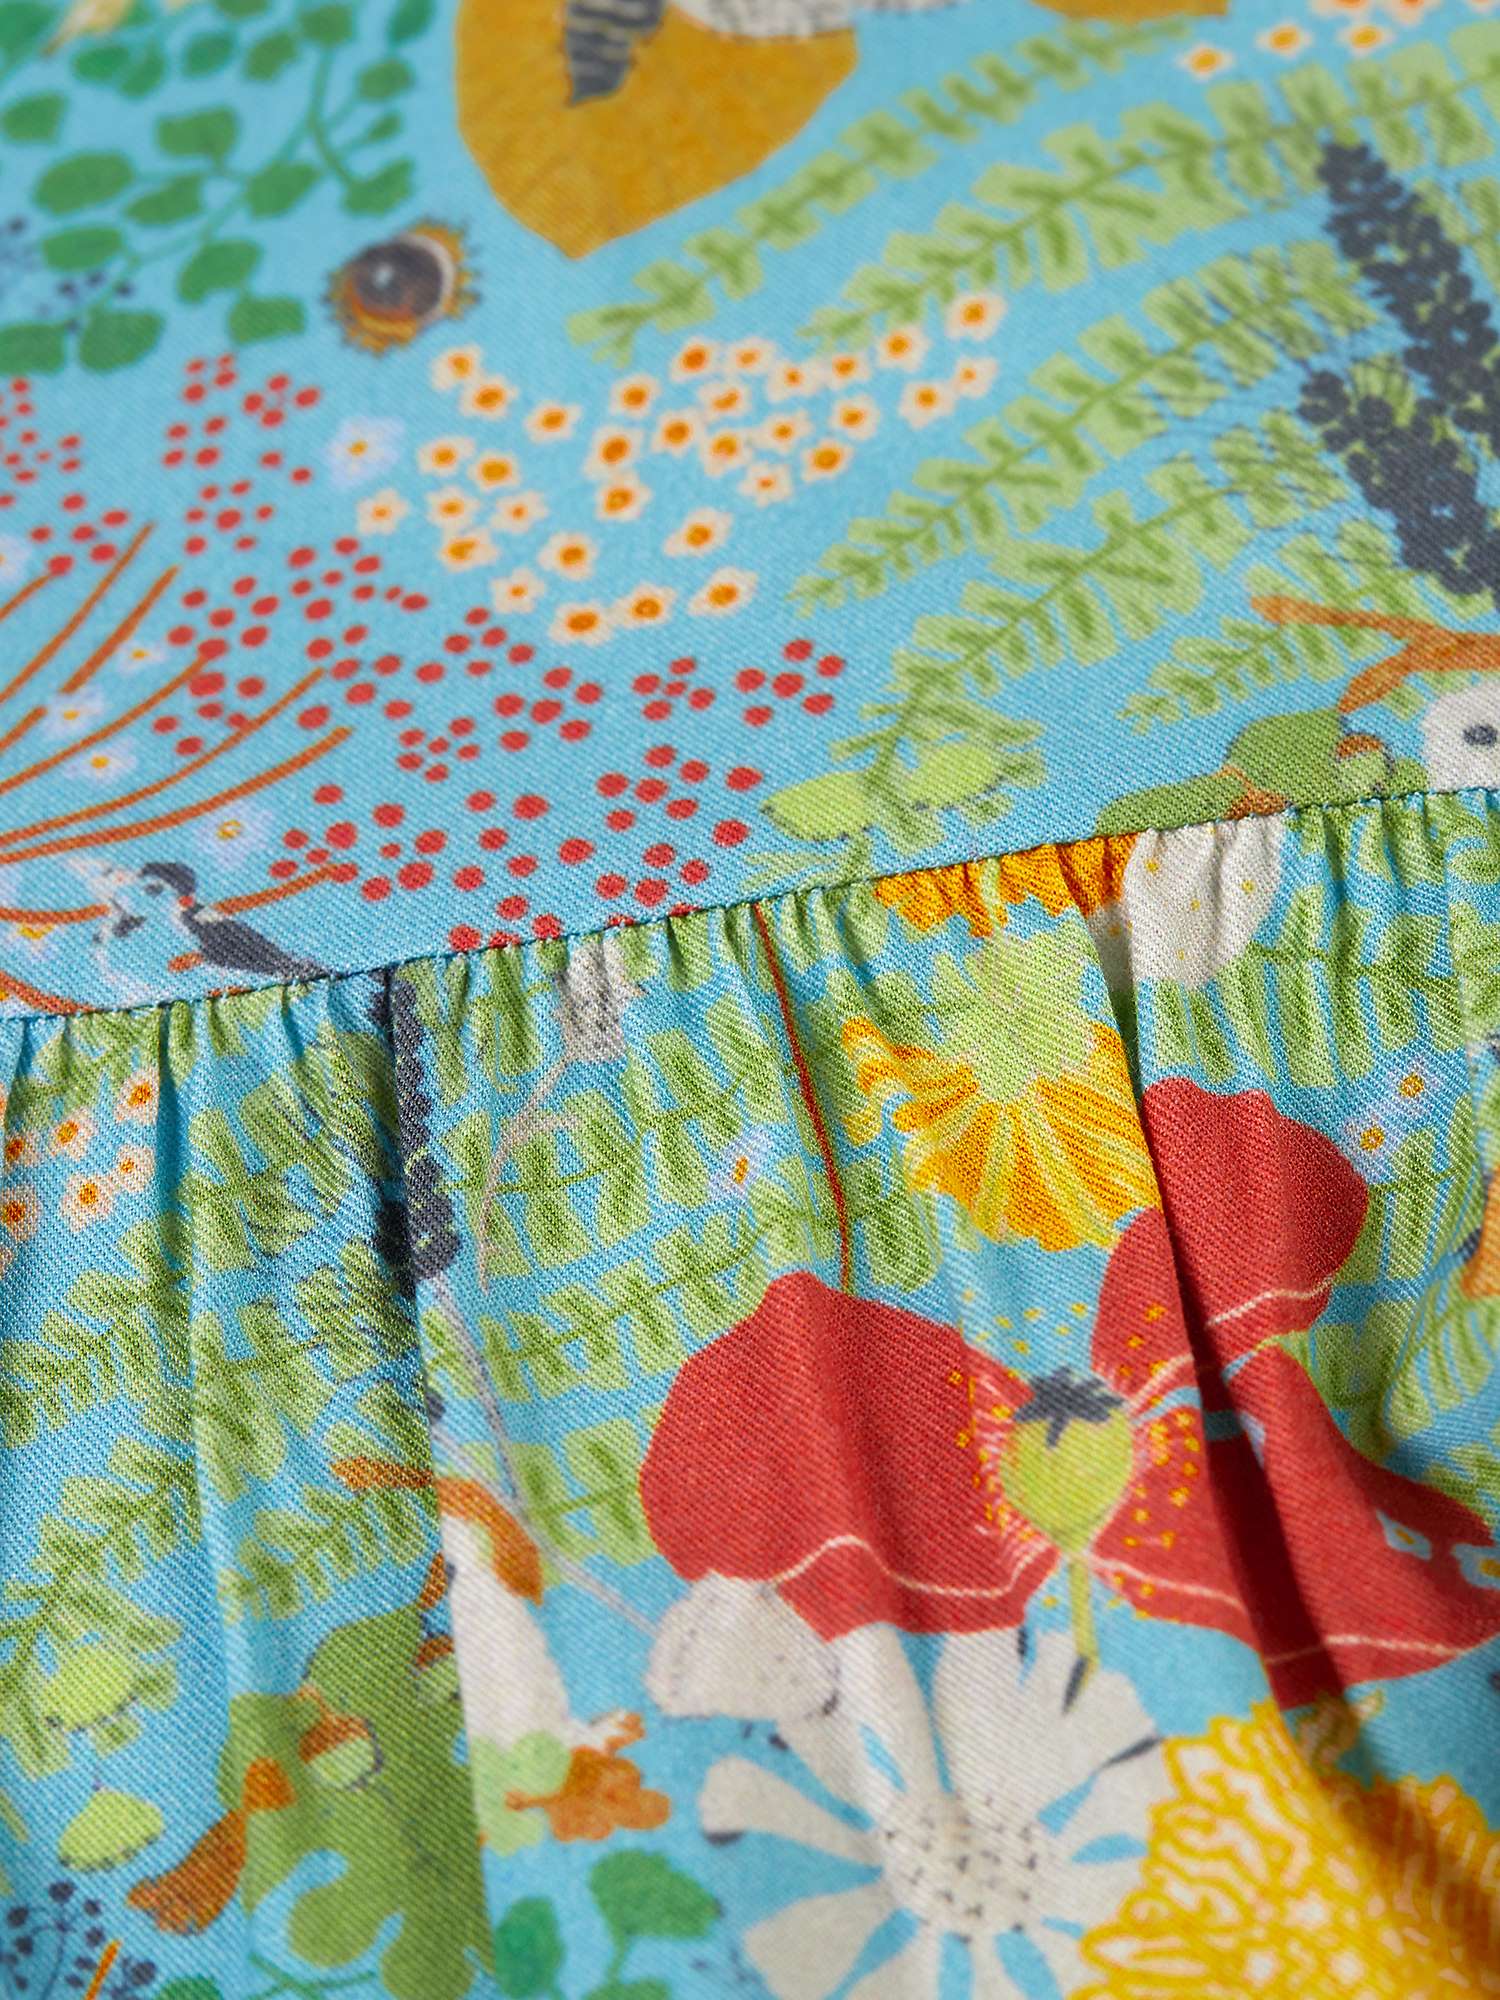 Buy Frugi Kids' Kew Gardens Orla Long Sleeve Dress, Woody Hollow Online at johnlewis.com